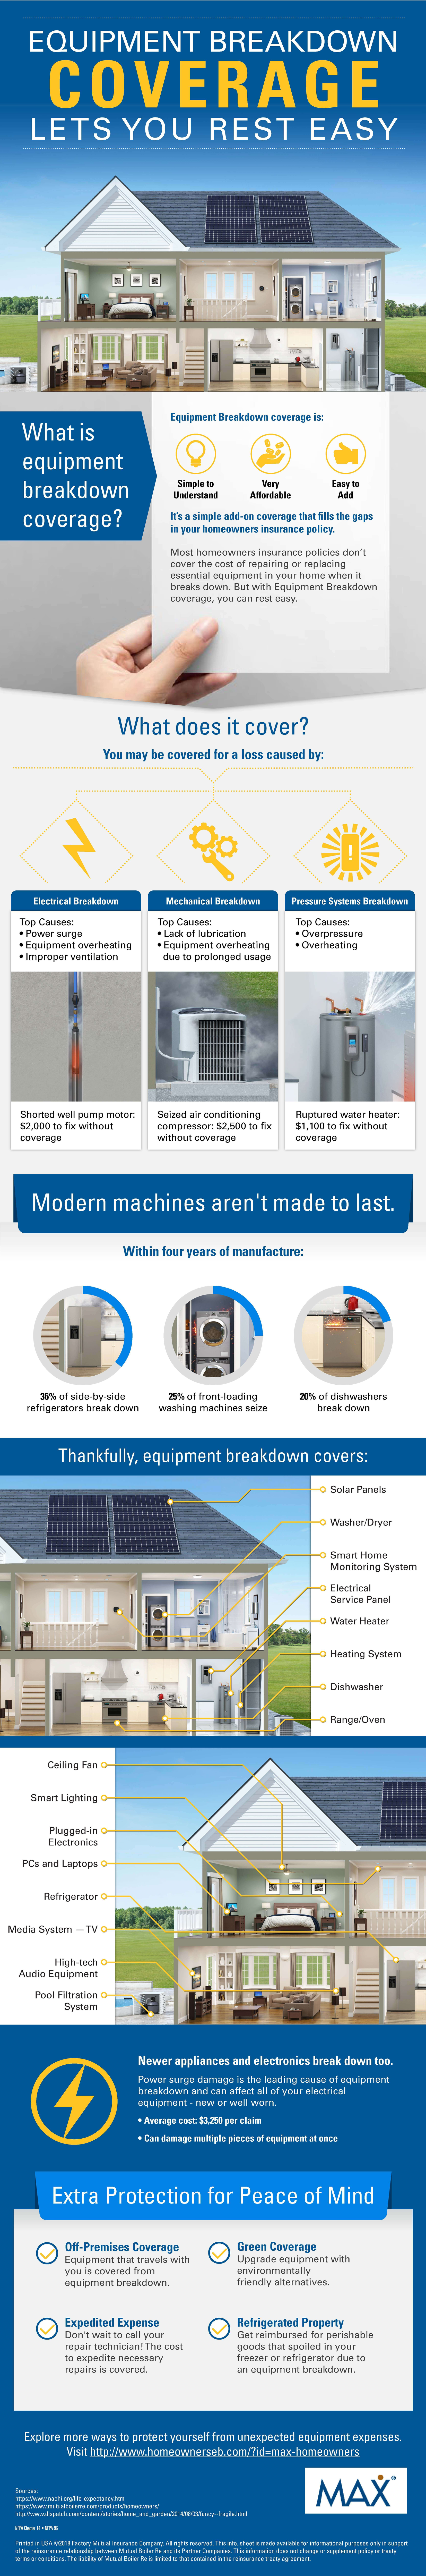 Equipment Breakdown Insurance Infographic